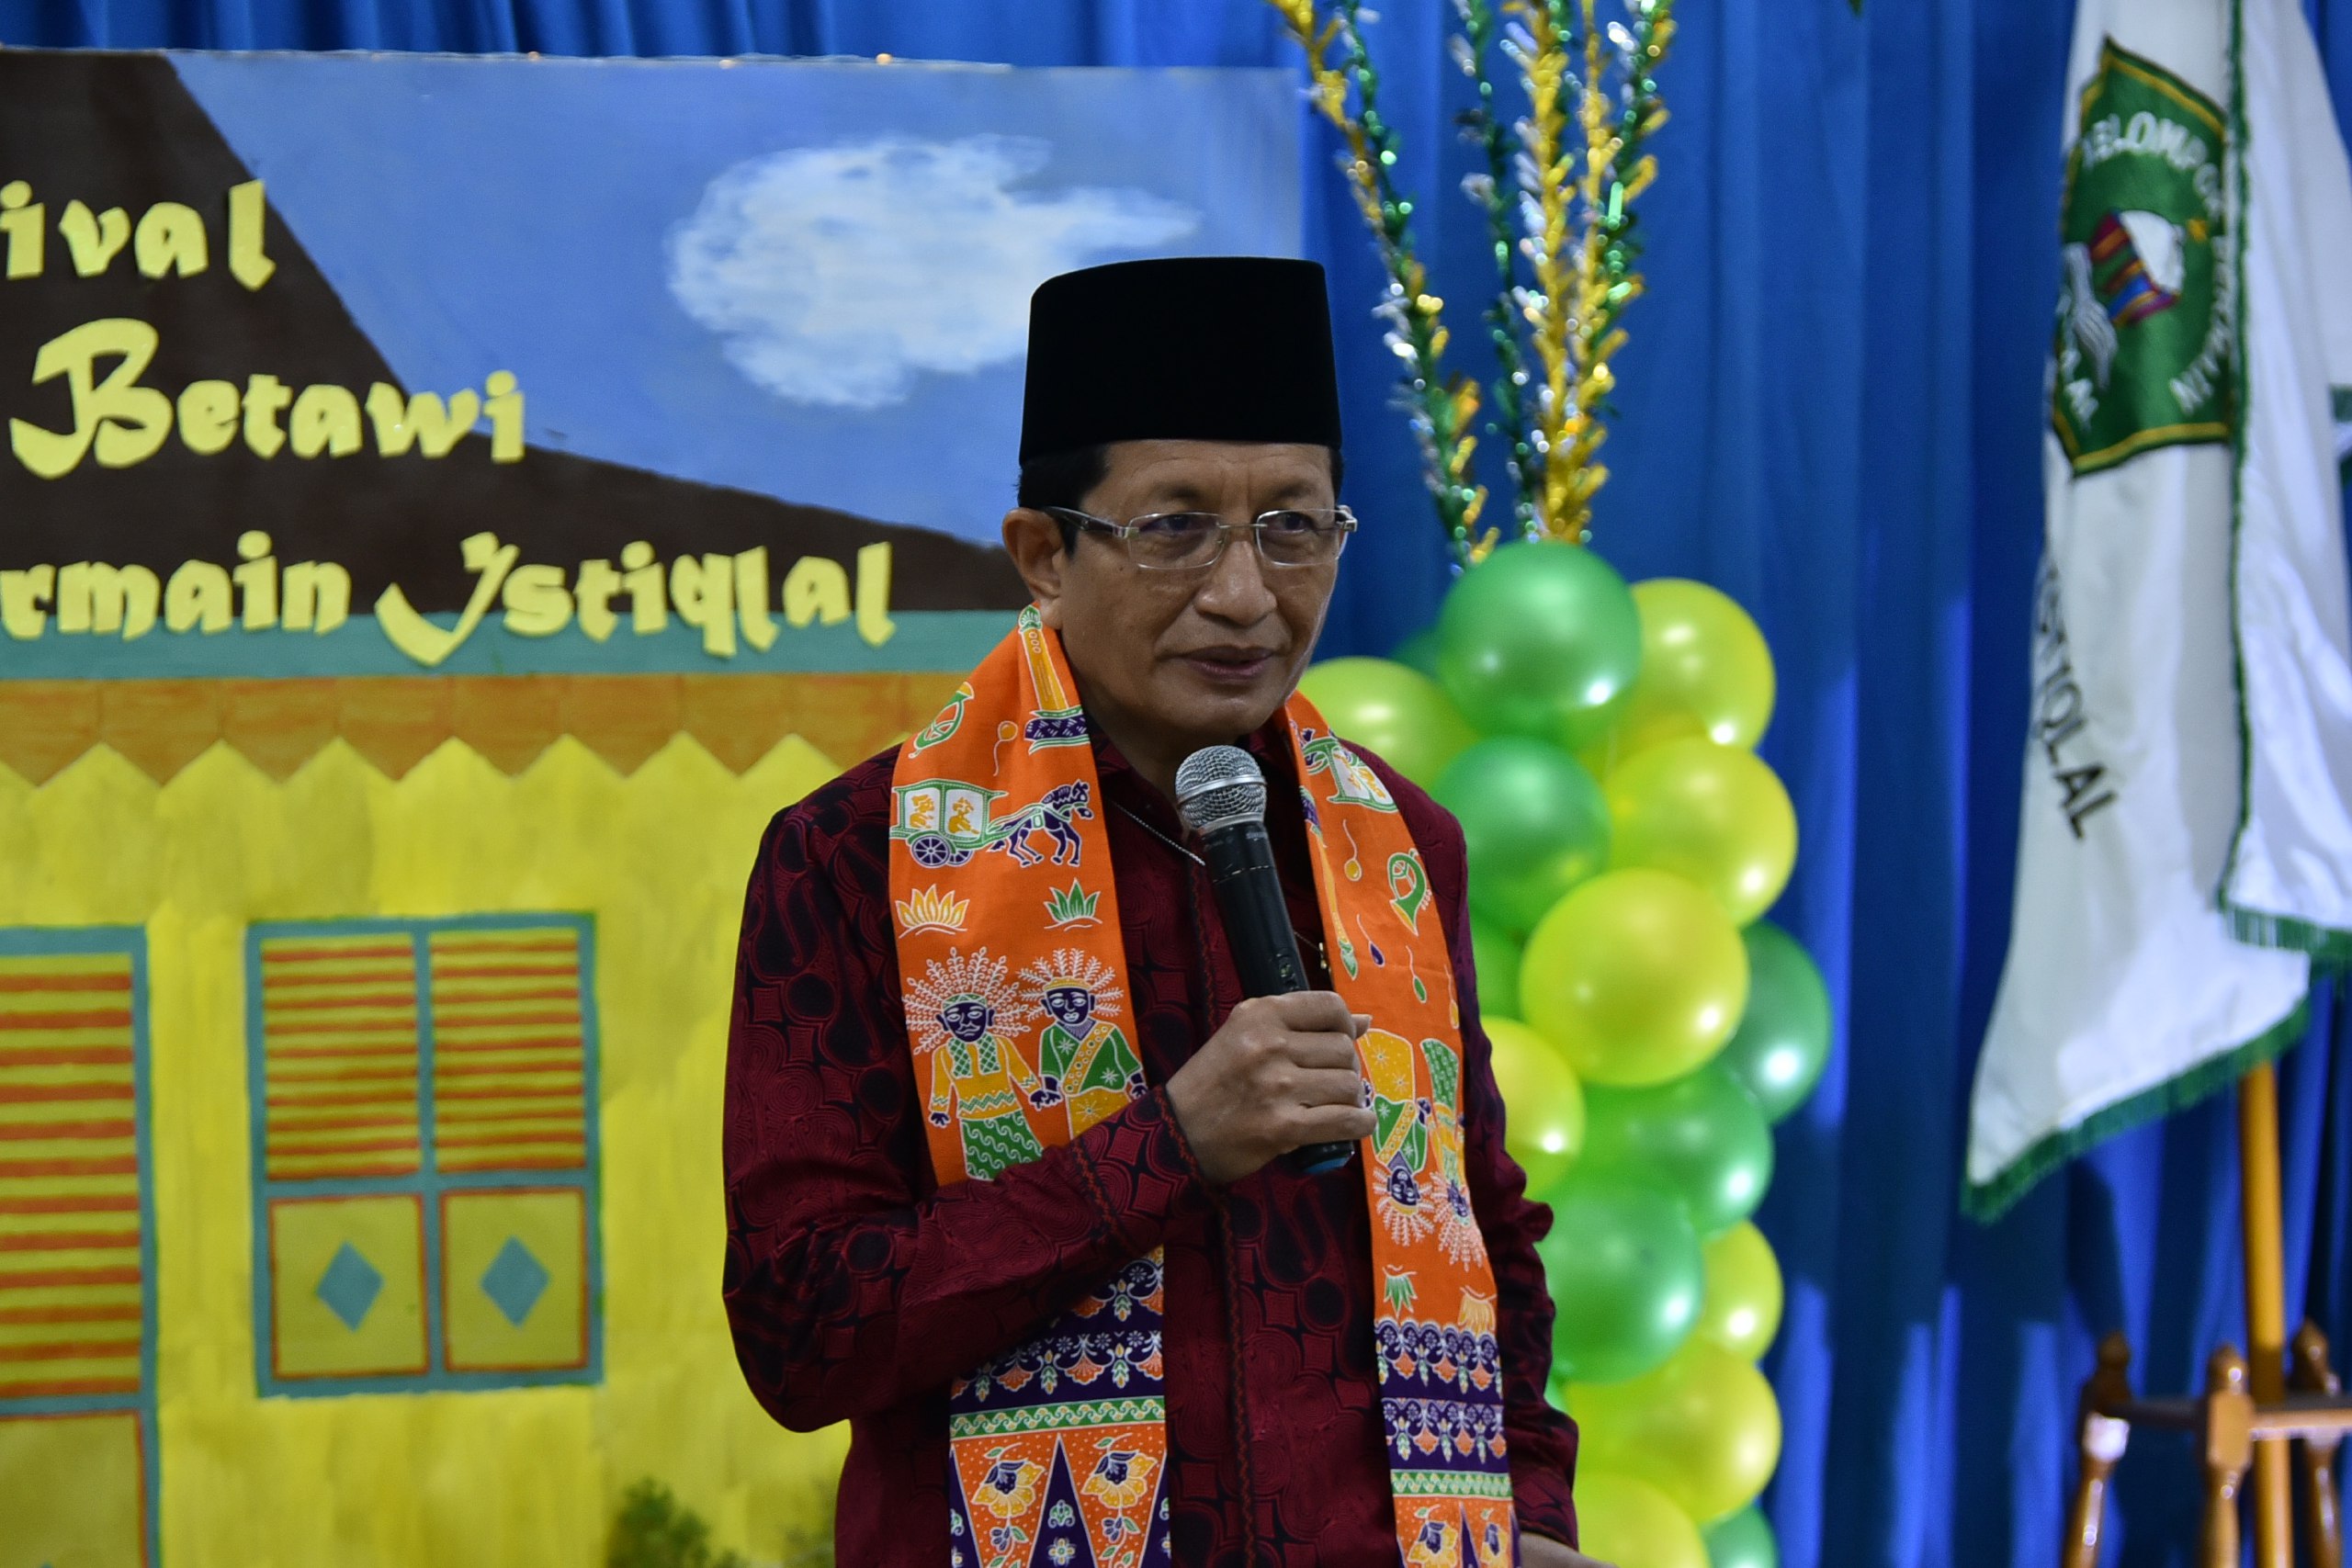 Sambutan Imam Besar Masjid Istiqlal Prof. Dr. KH. Nasaruddin Umar, MA